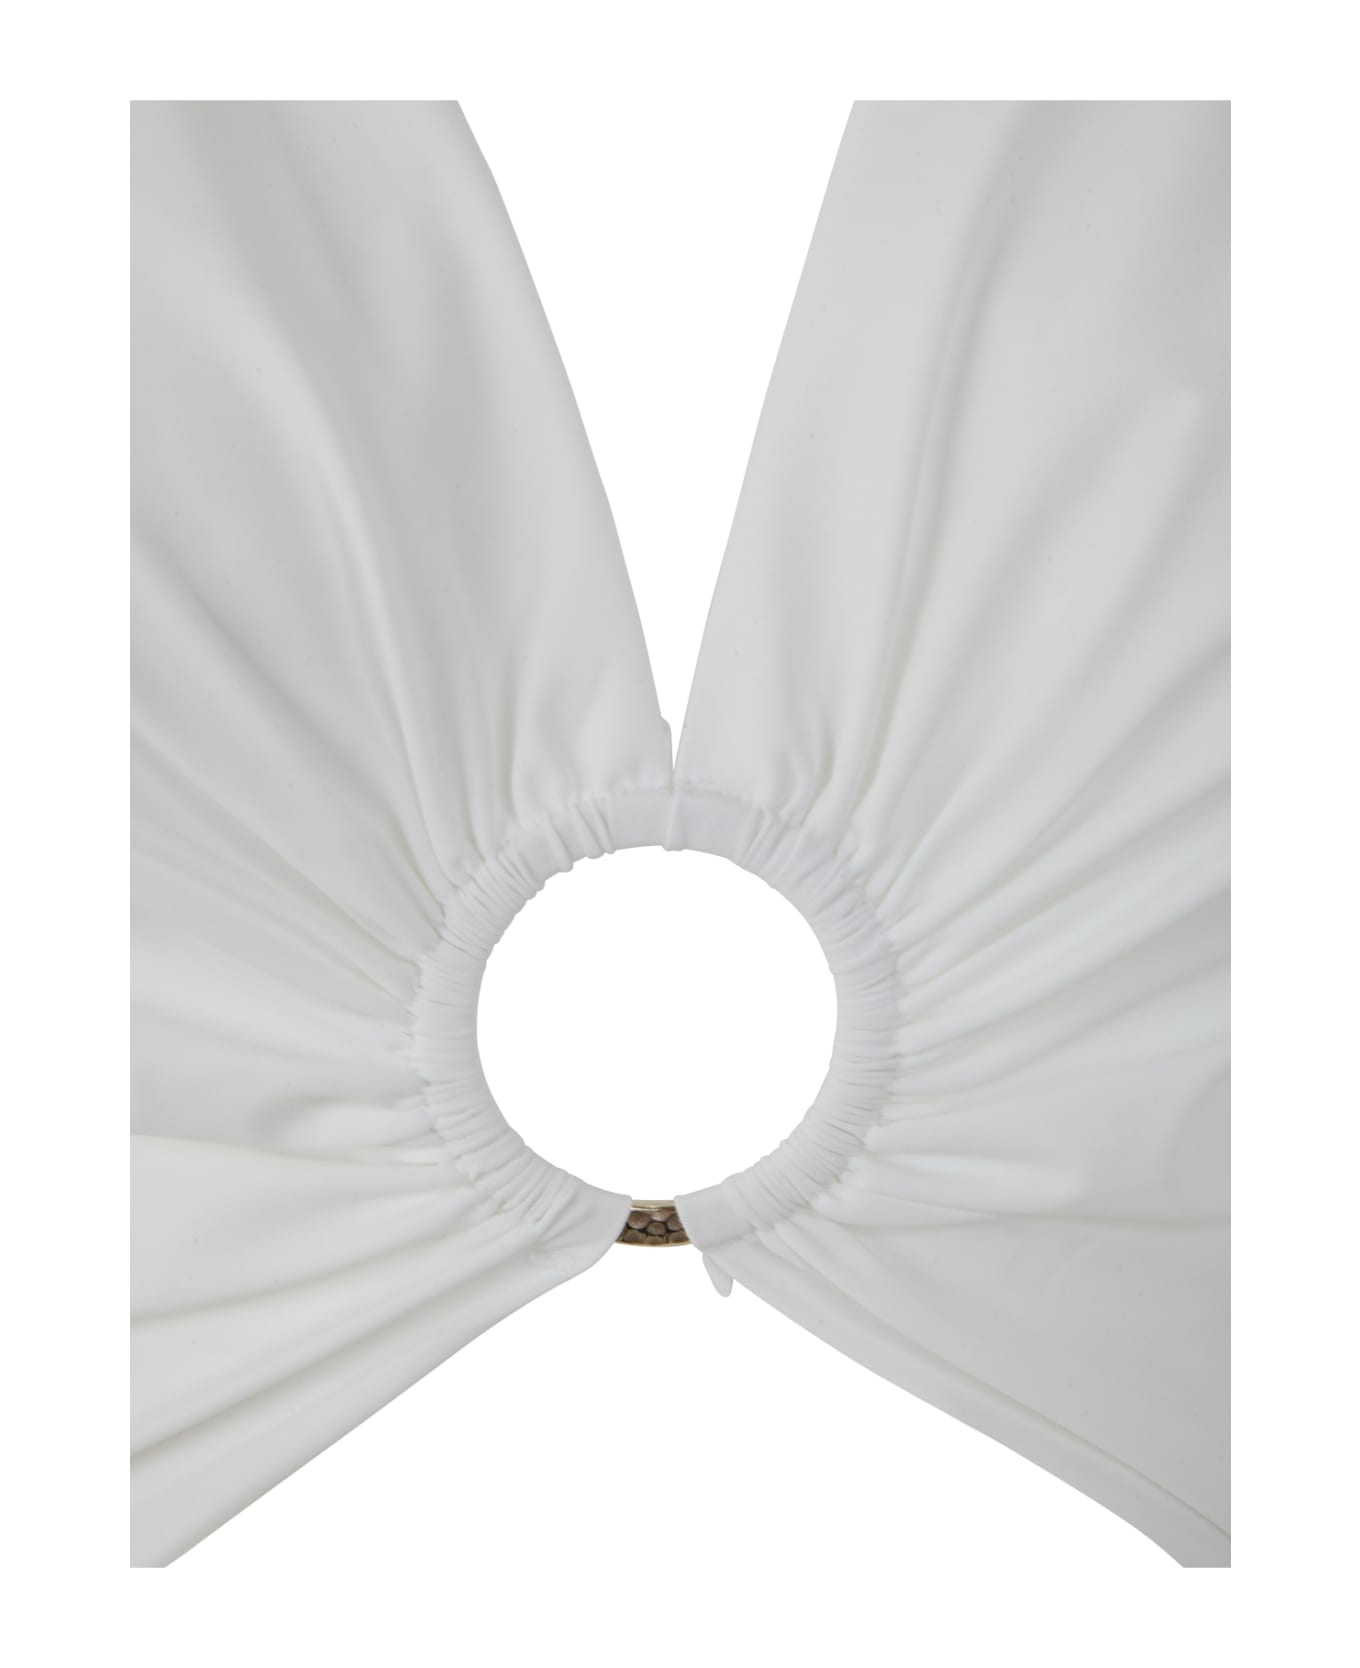 La Petit Robe Di Chiara Boni Severa Long Sleeves Top - White